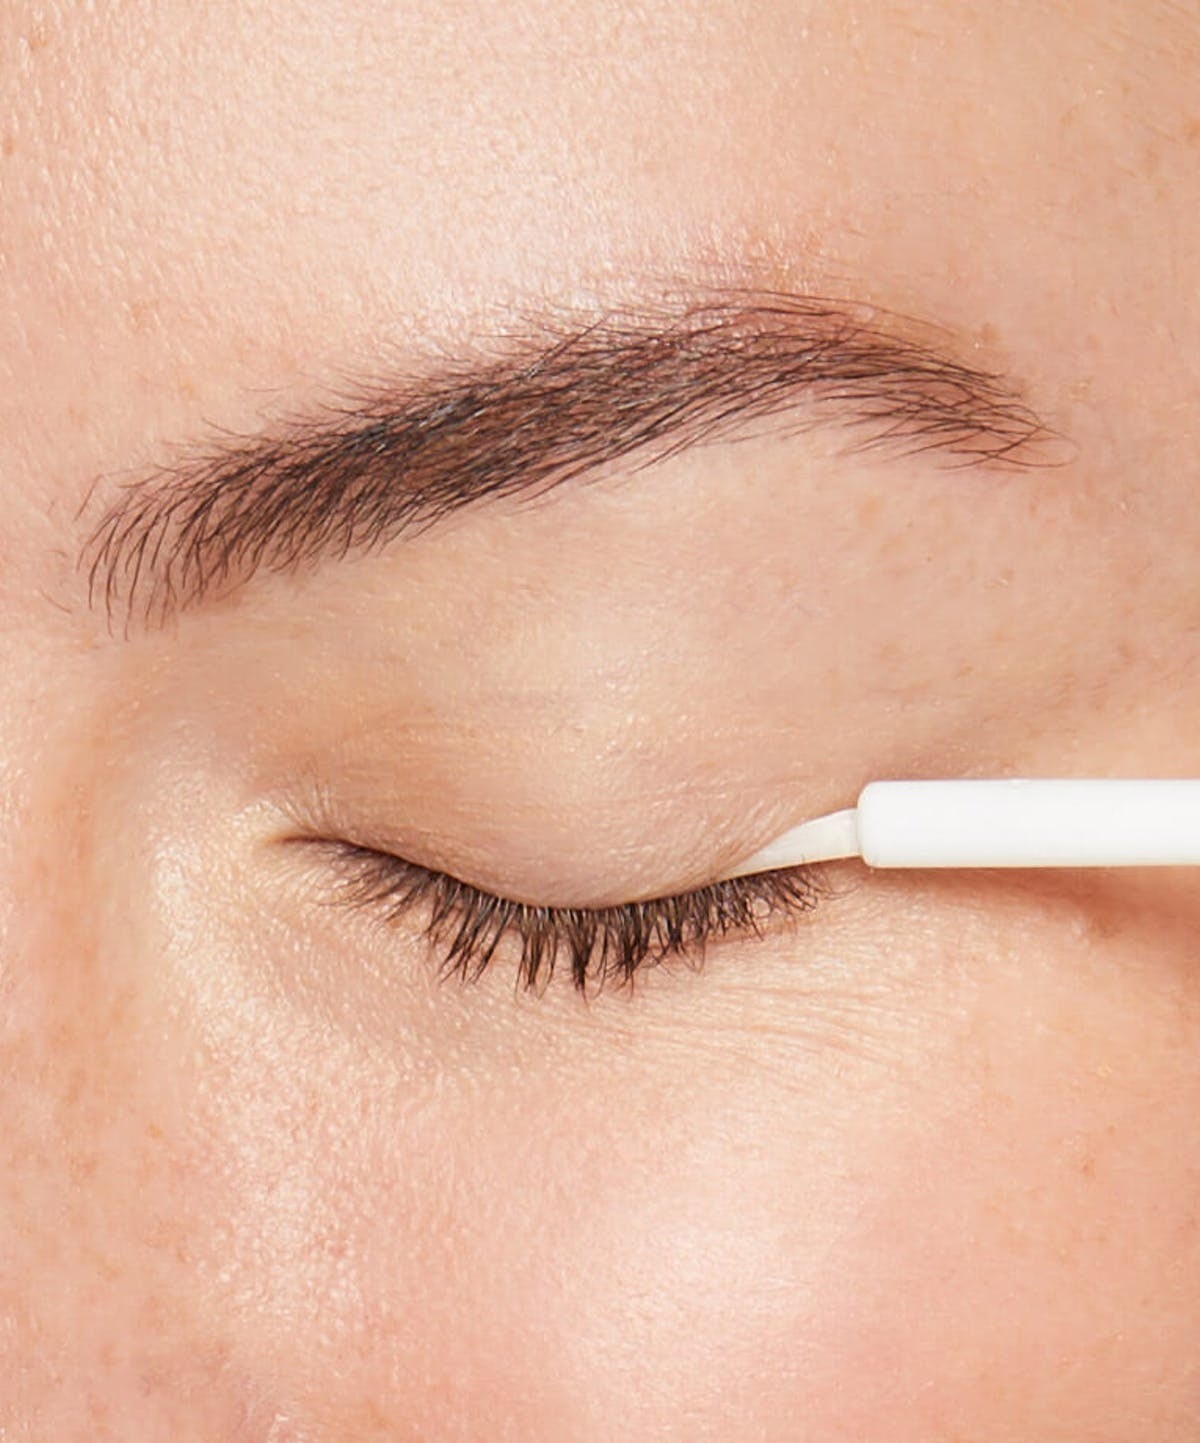 Model uses the white tube of eyelash serum on her eyelash line